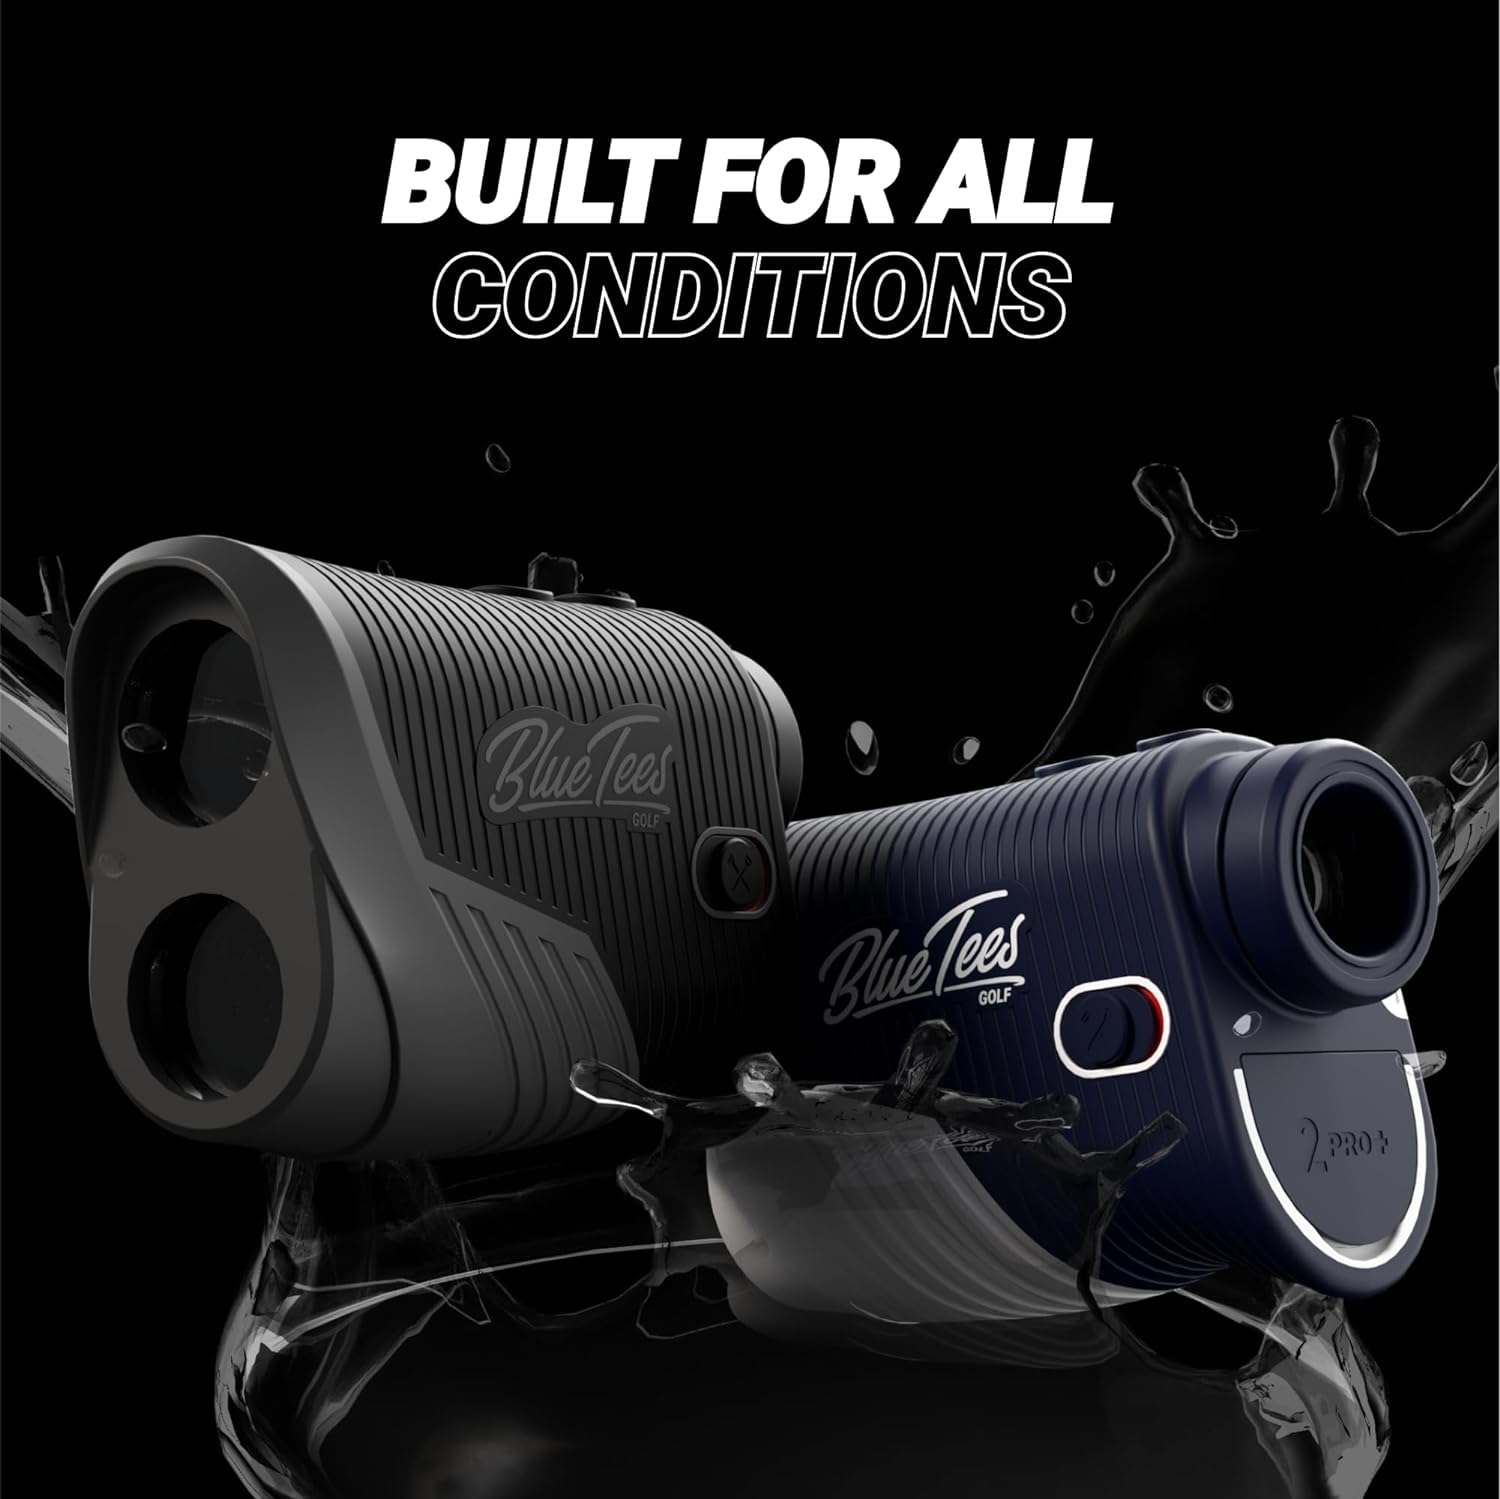 Blue Tees Golf - Series 2 Pro+ Laser Rangefinder with Slope Switch - 800 Yards Range, Slope Measurement, Flag Lock with Pulse Vibration, 6X Magnification - Black